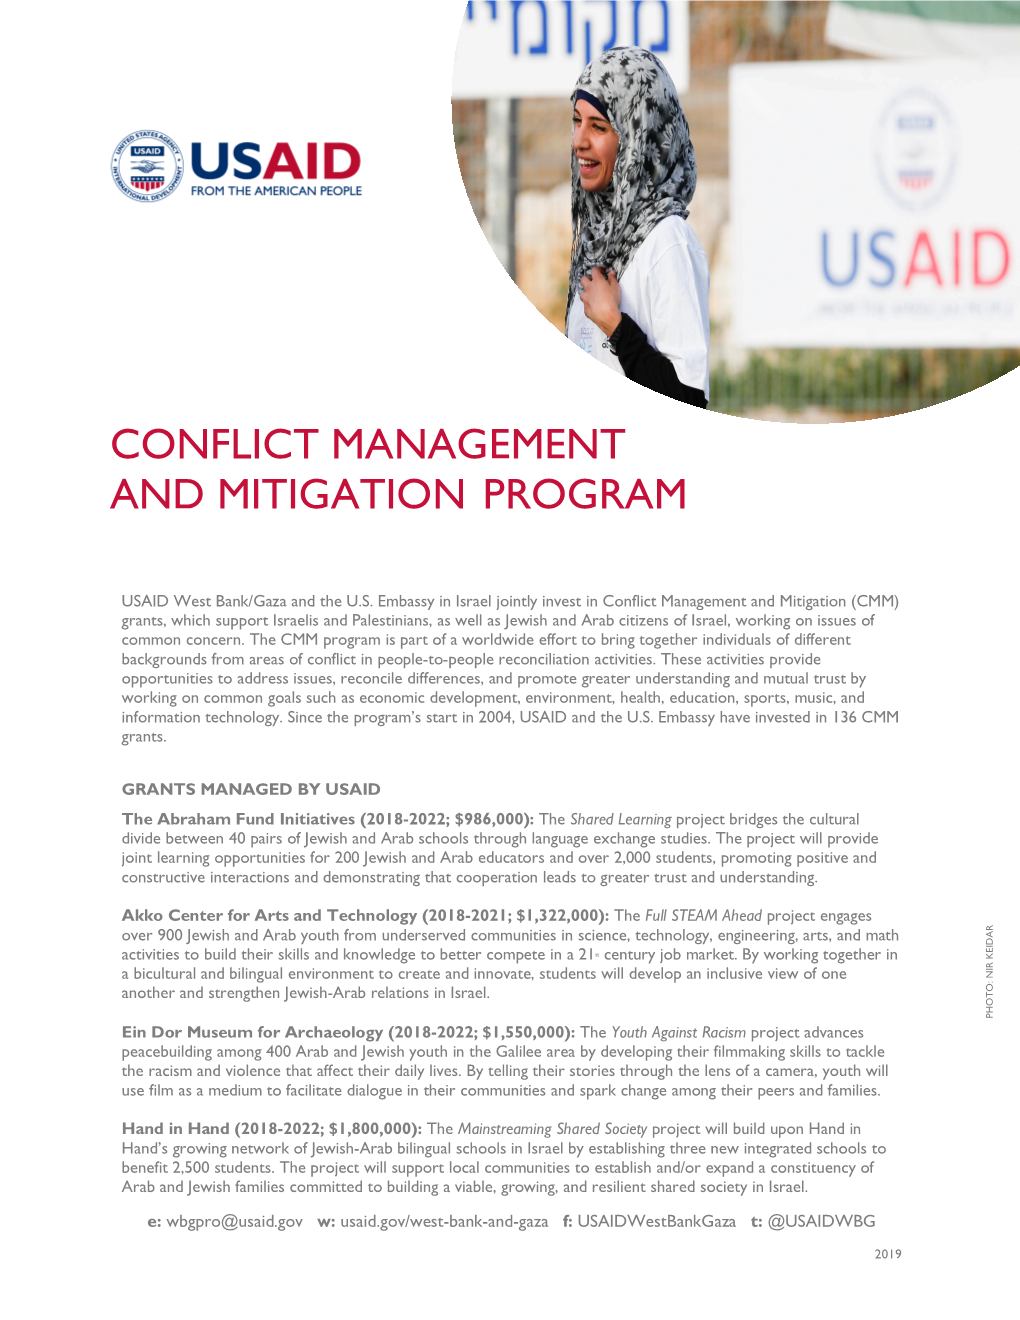 Conflict Management and Mitigation Program